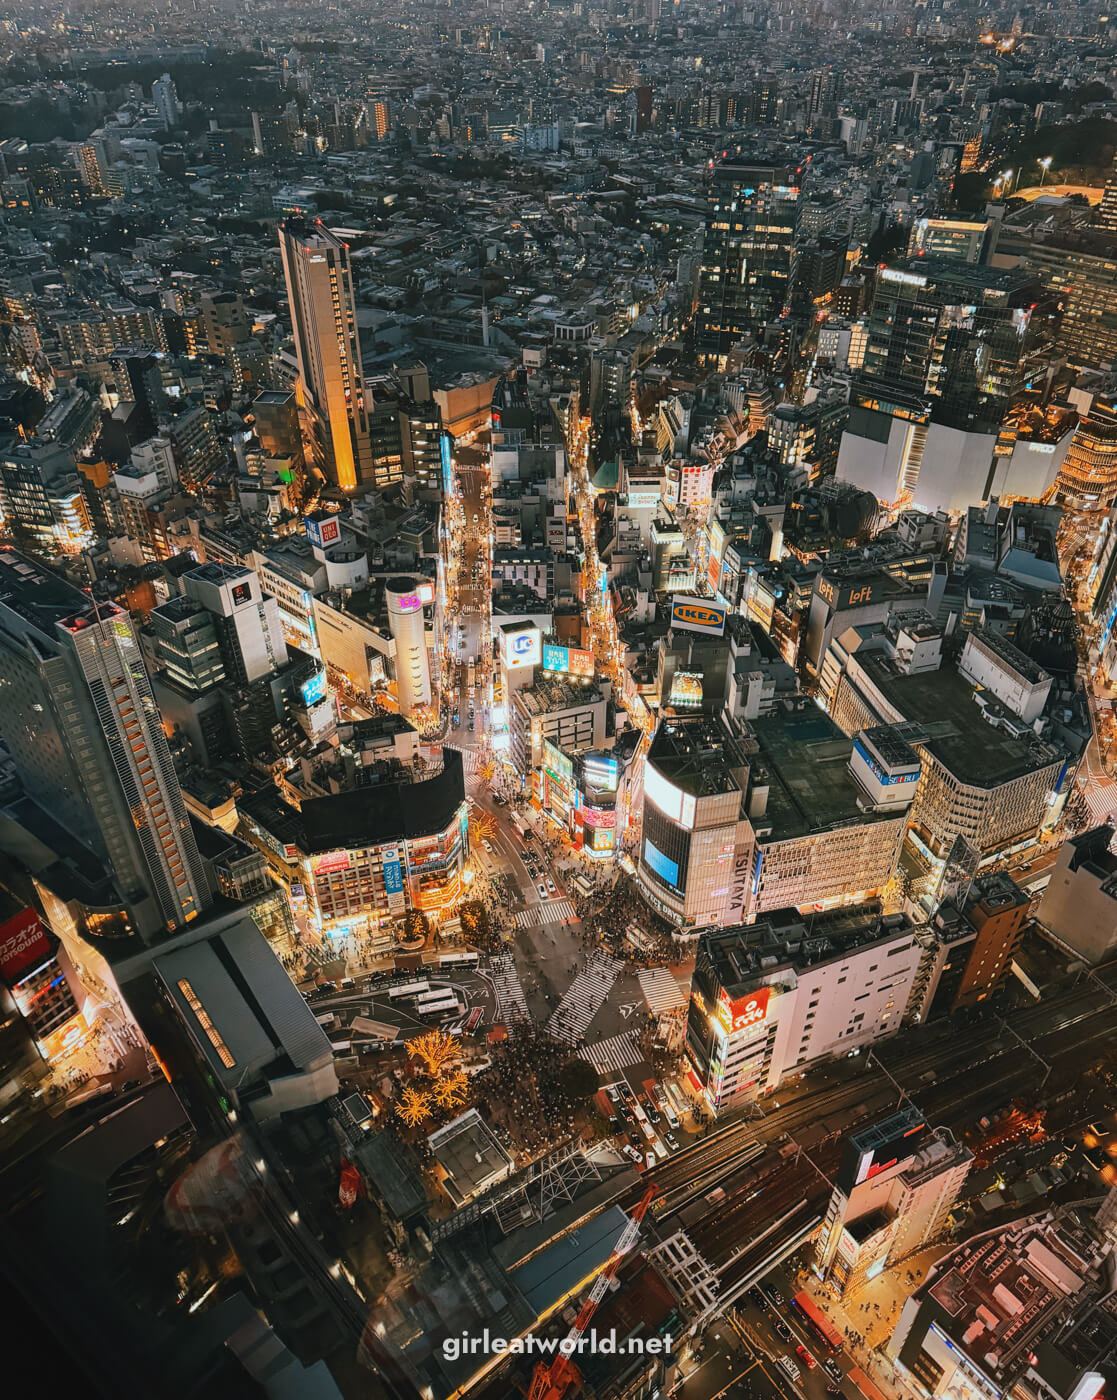 Shibuya Scramble Crossing from the 46th Floor